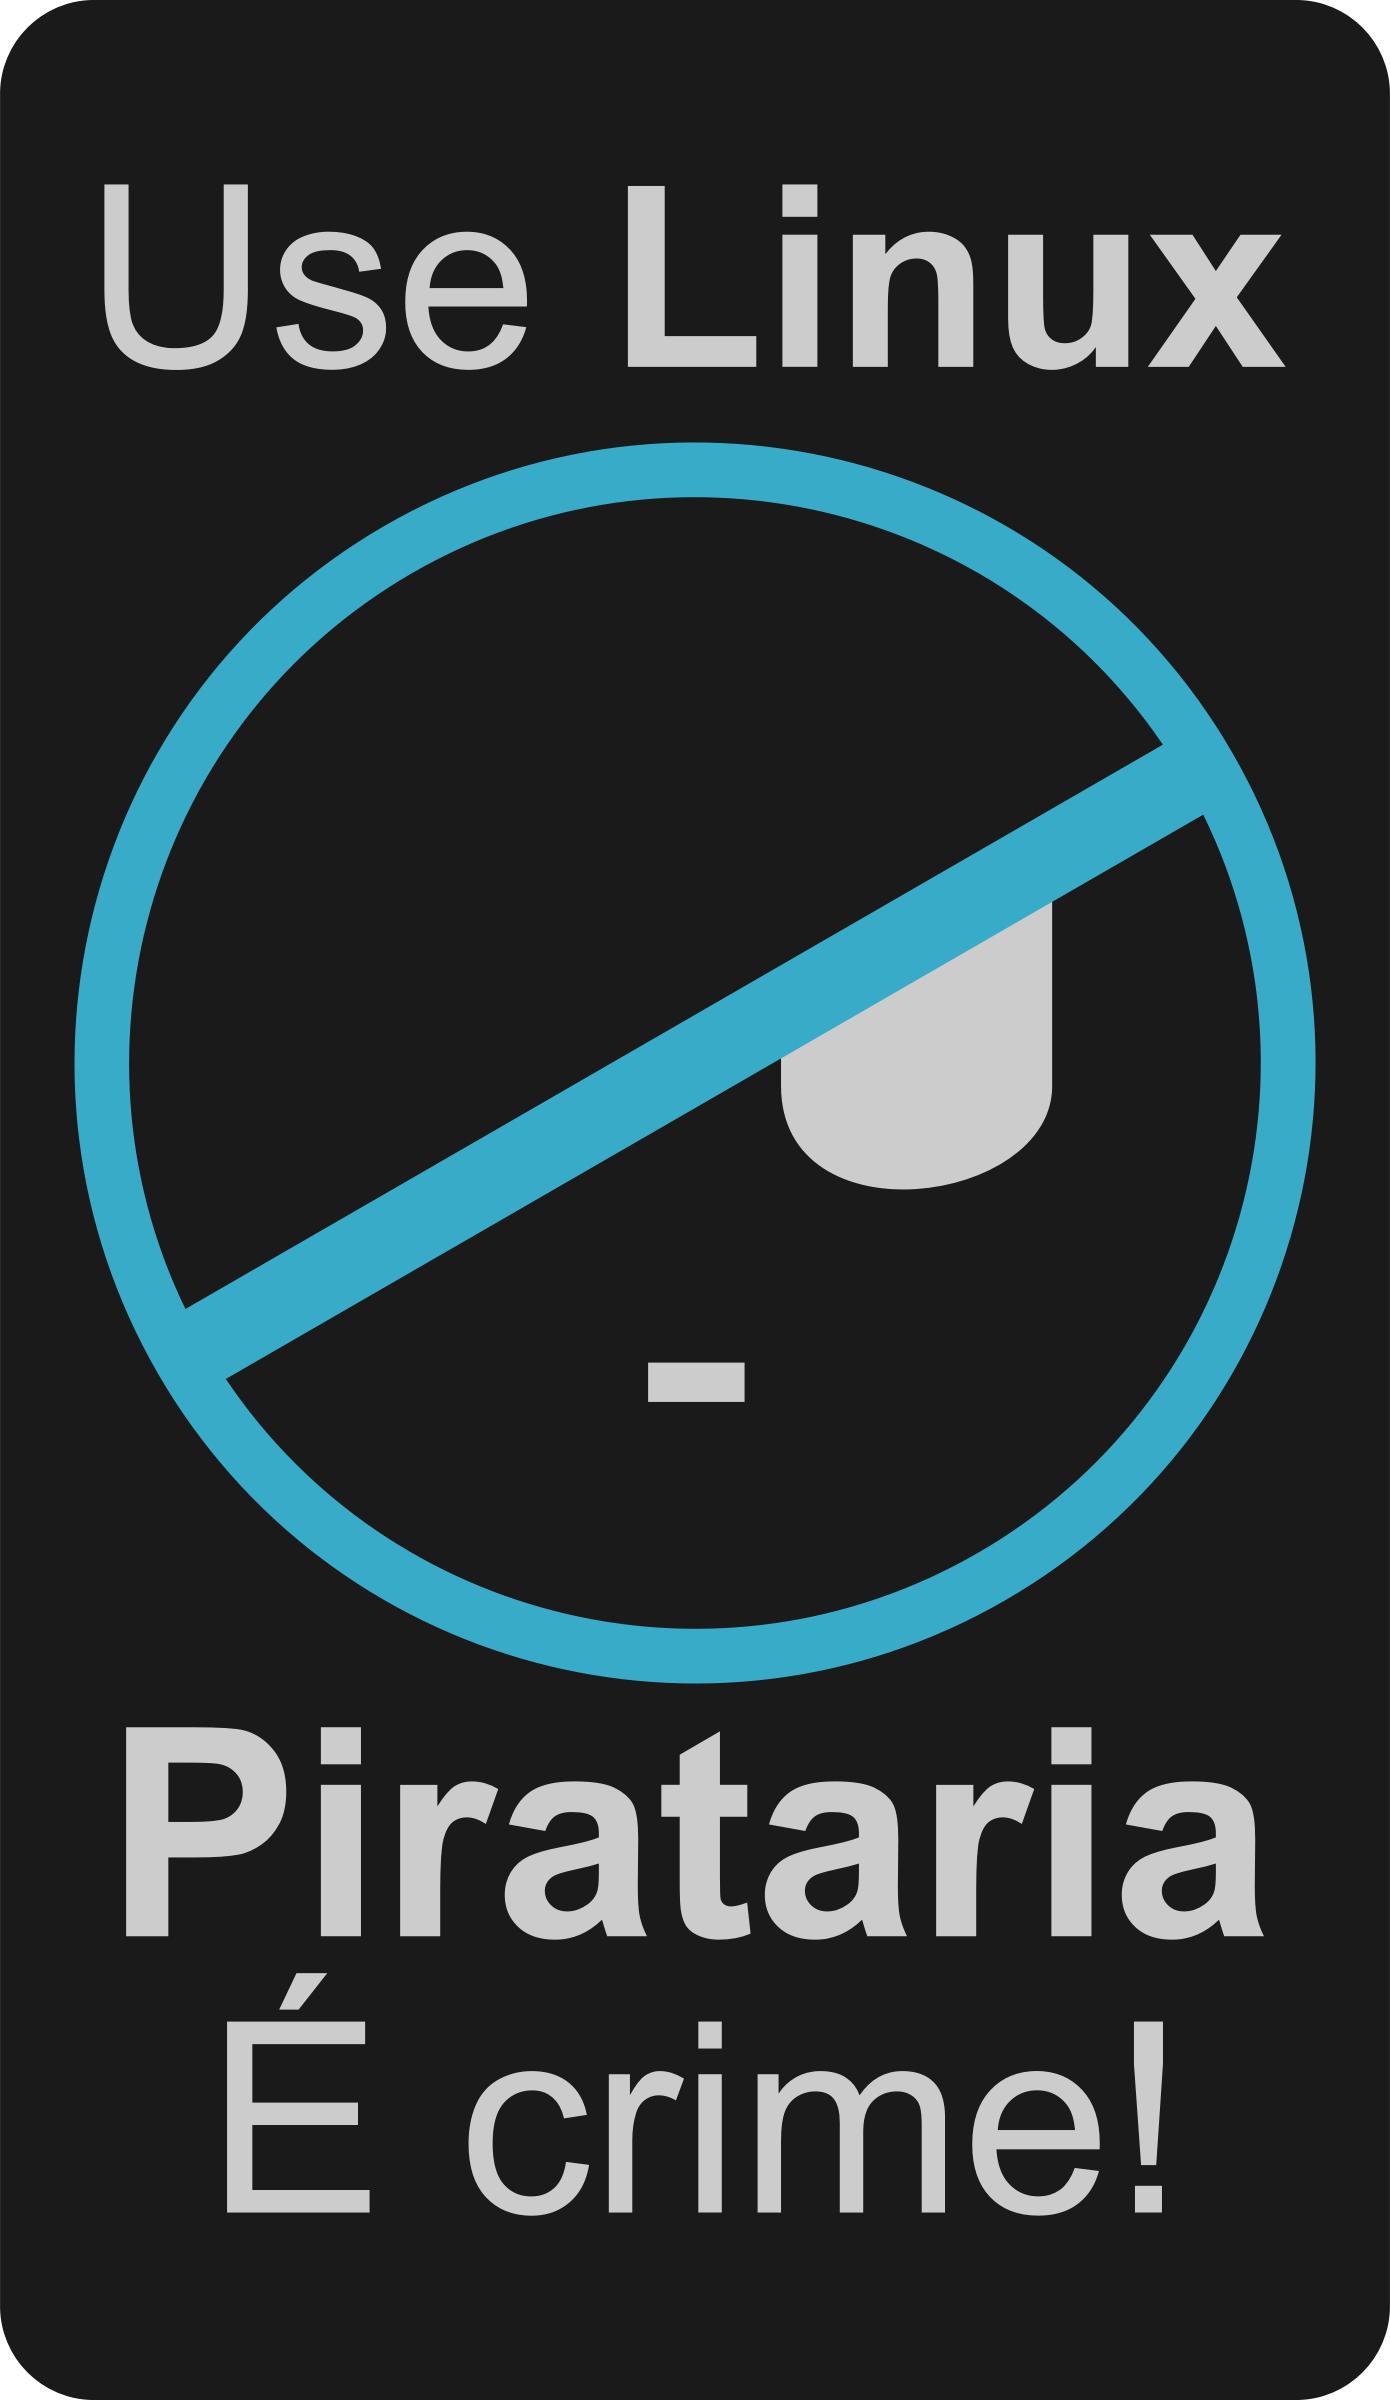 Pirataria Ã© Crime! Use Linux png